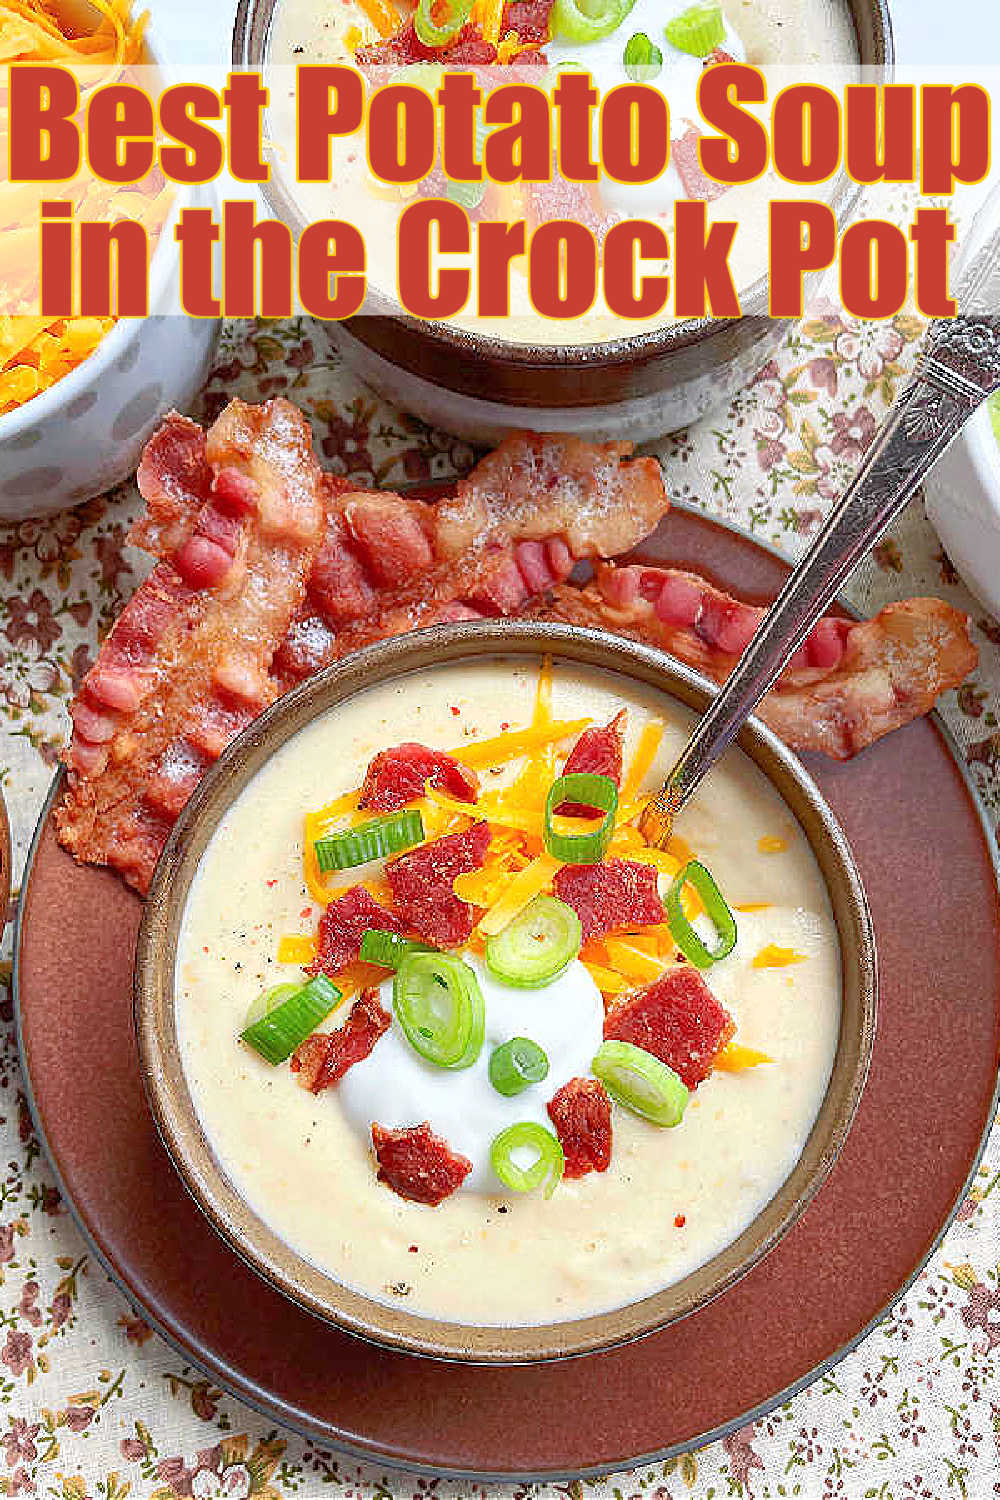 Potato Soup in the Crockpot | Foodtastic Mom #crockpotpotatosoup #potatosouprecipe #crockpotrecipes via @foodtasticmom